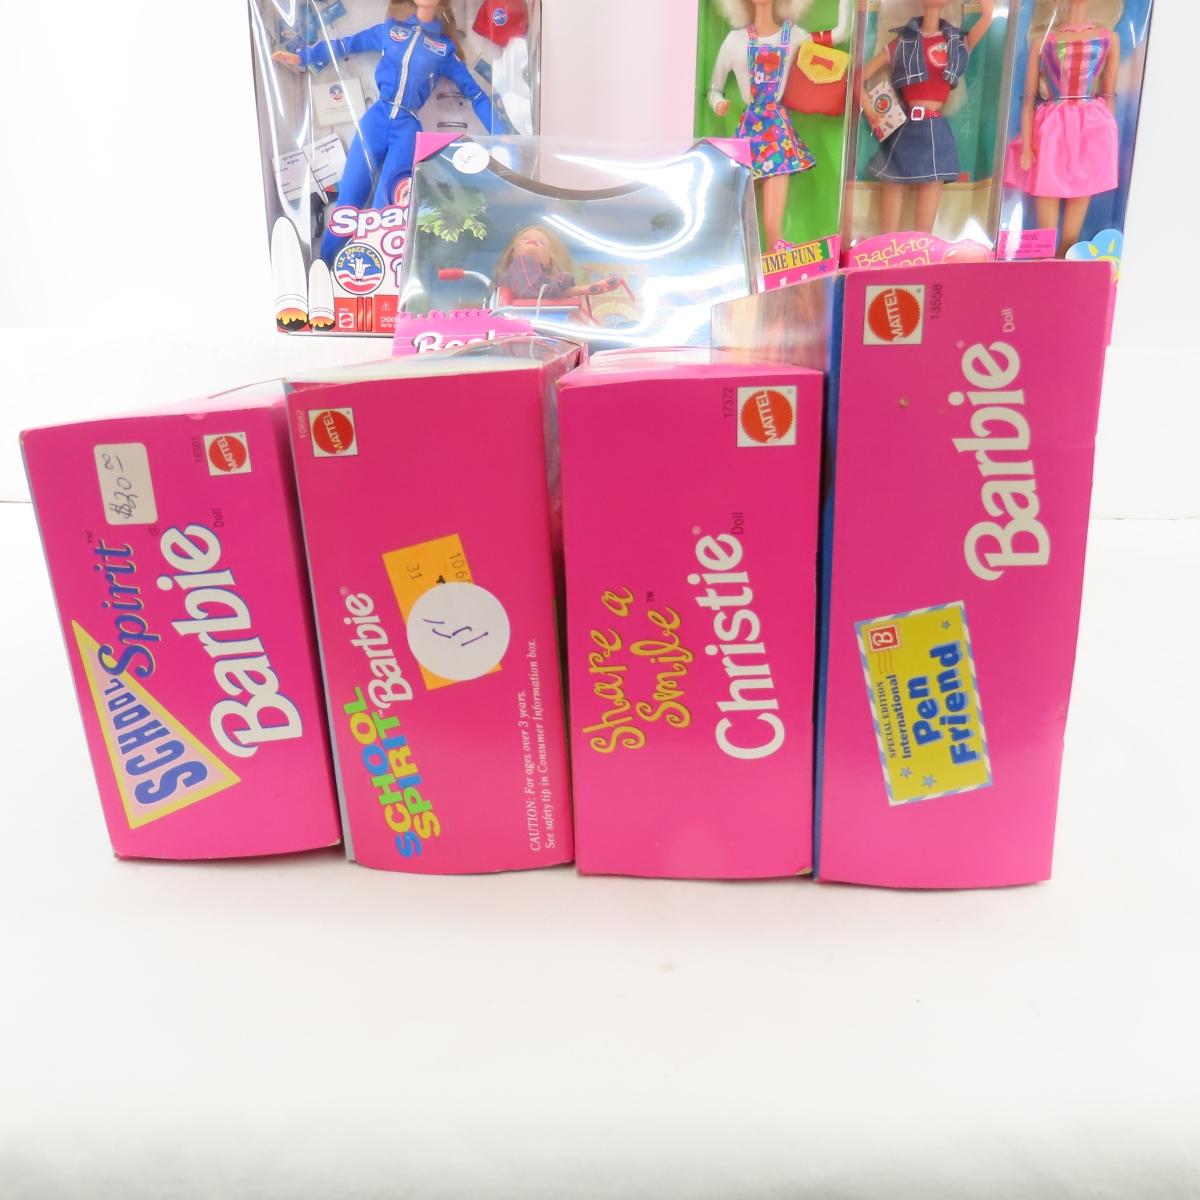 7 Barbie, Christie & Becky Dolls in Box